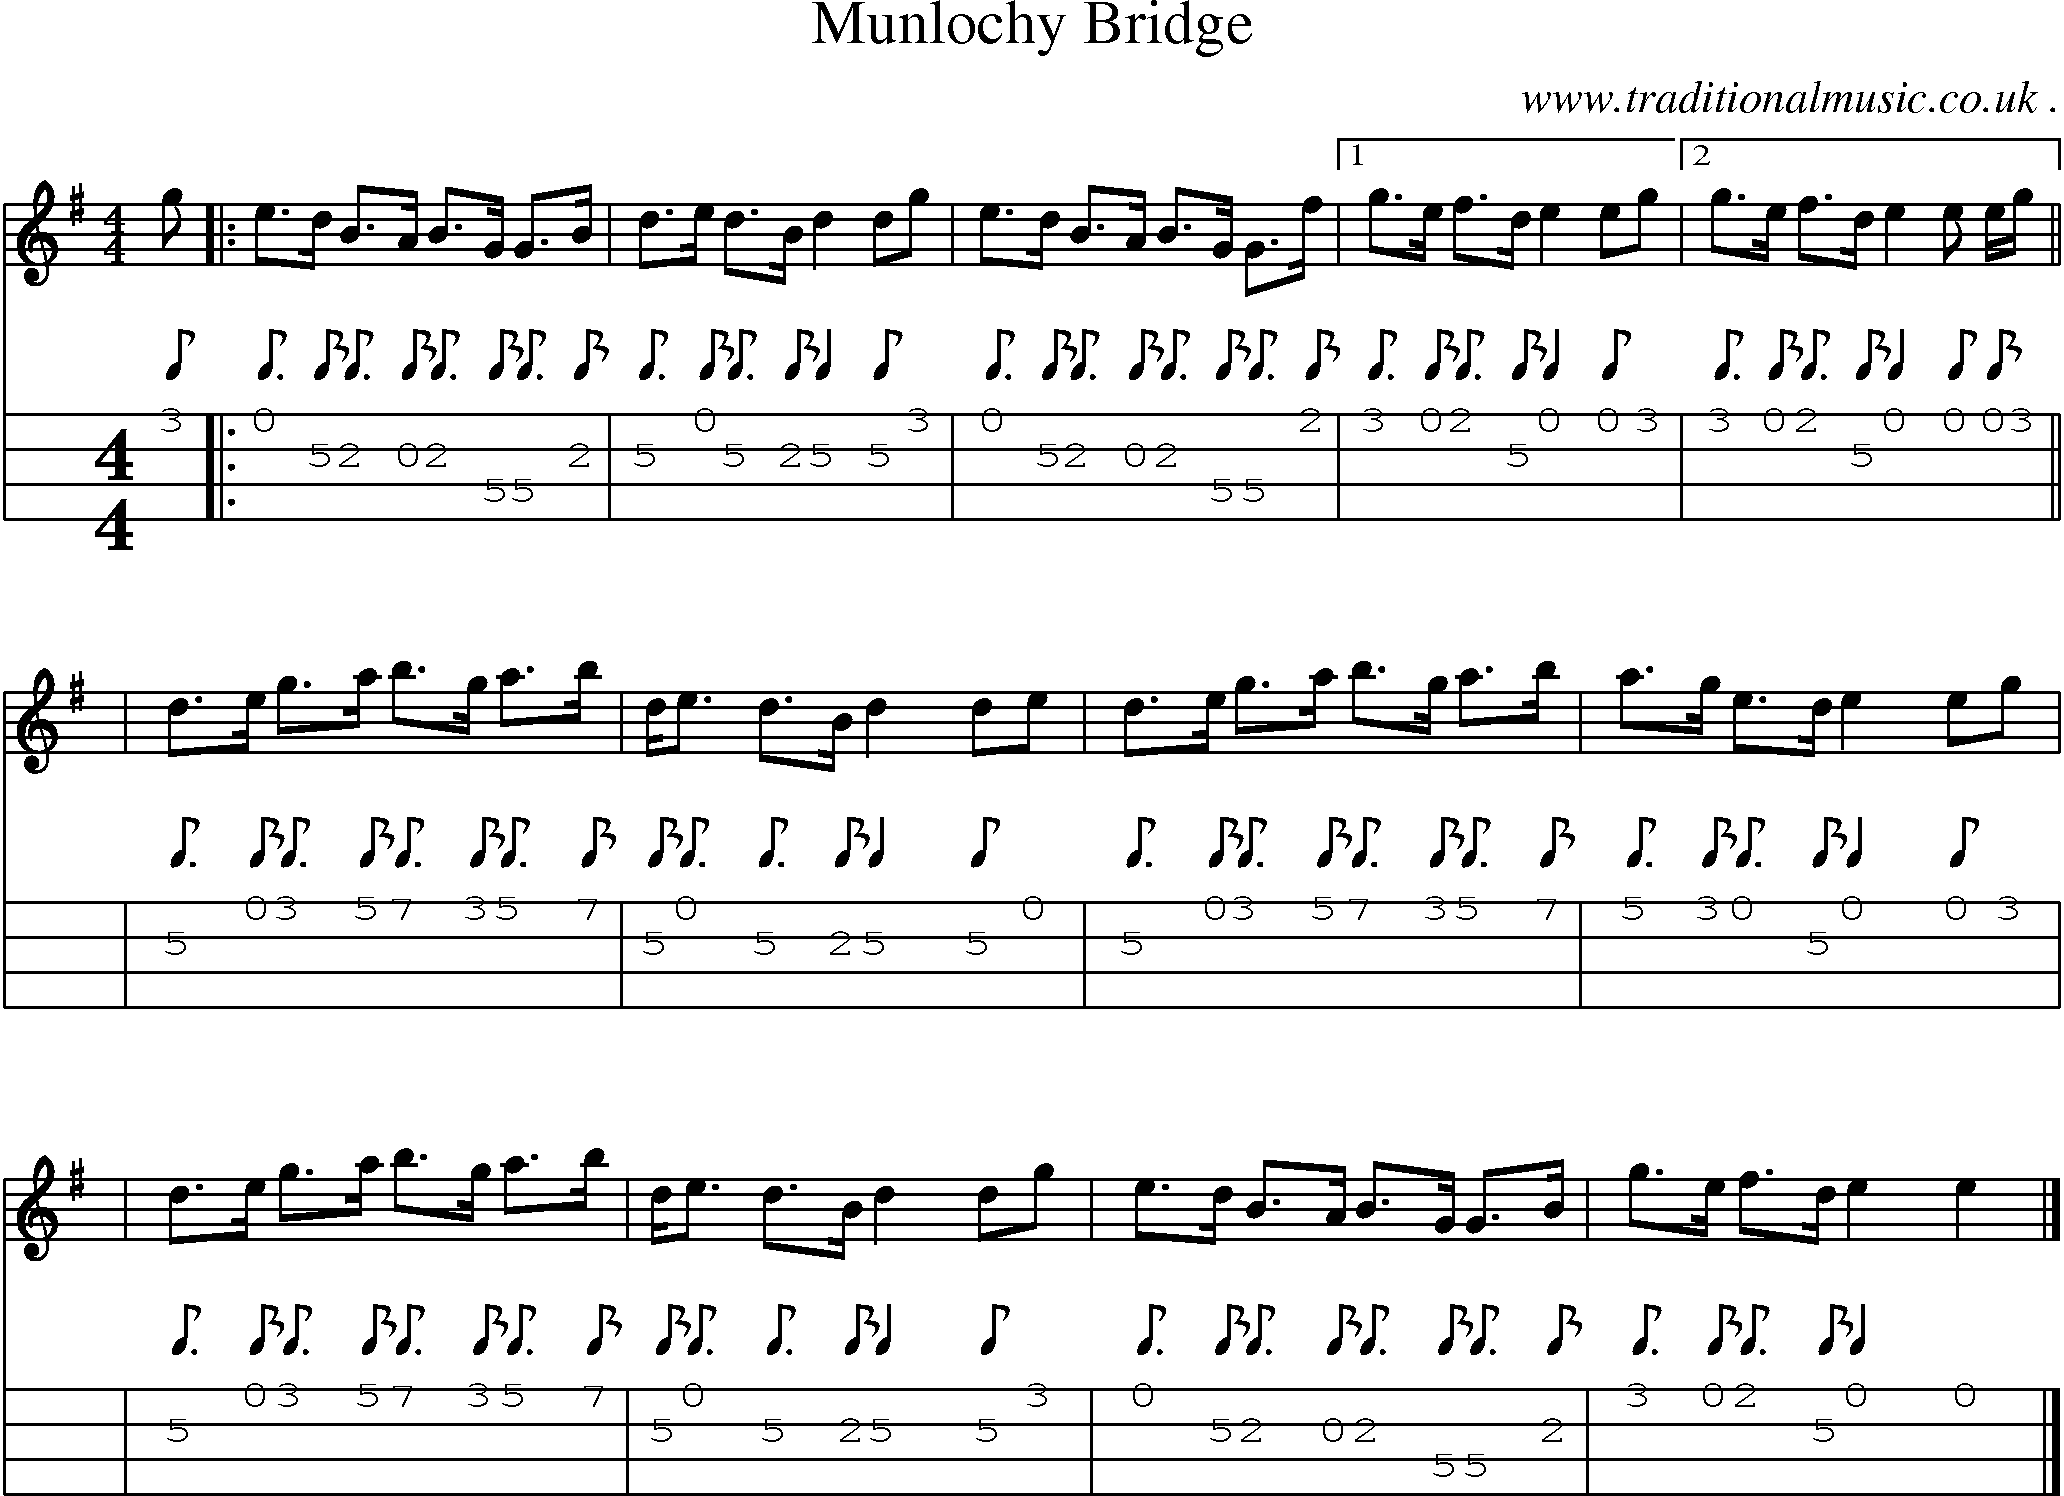 Sheet-music  score, Chords and Mandolin Tabs for Munlochy Bridge